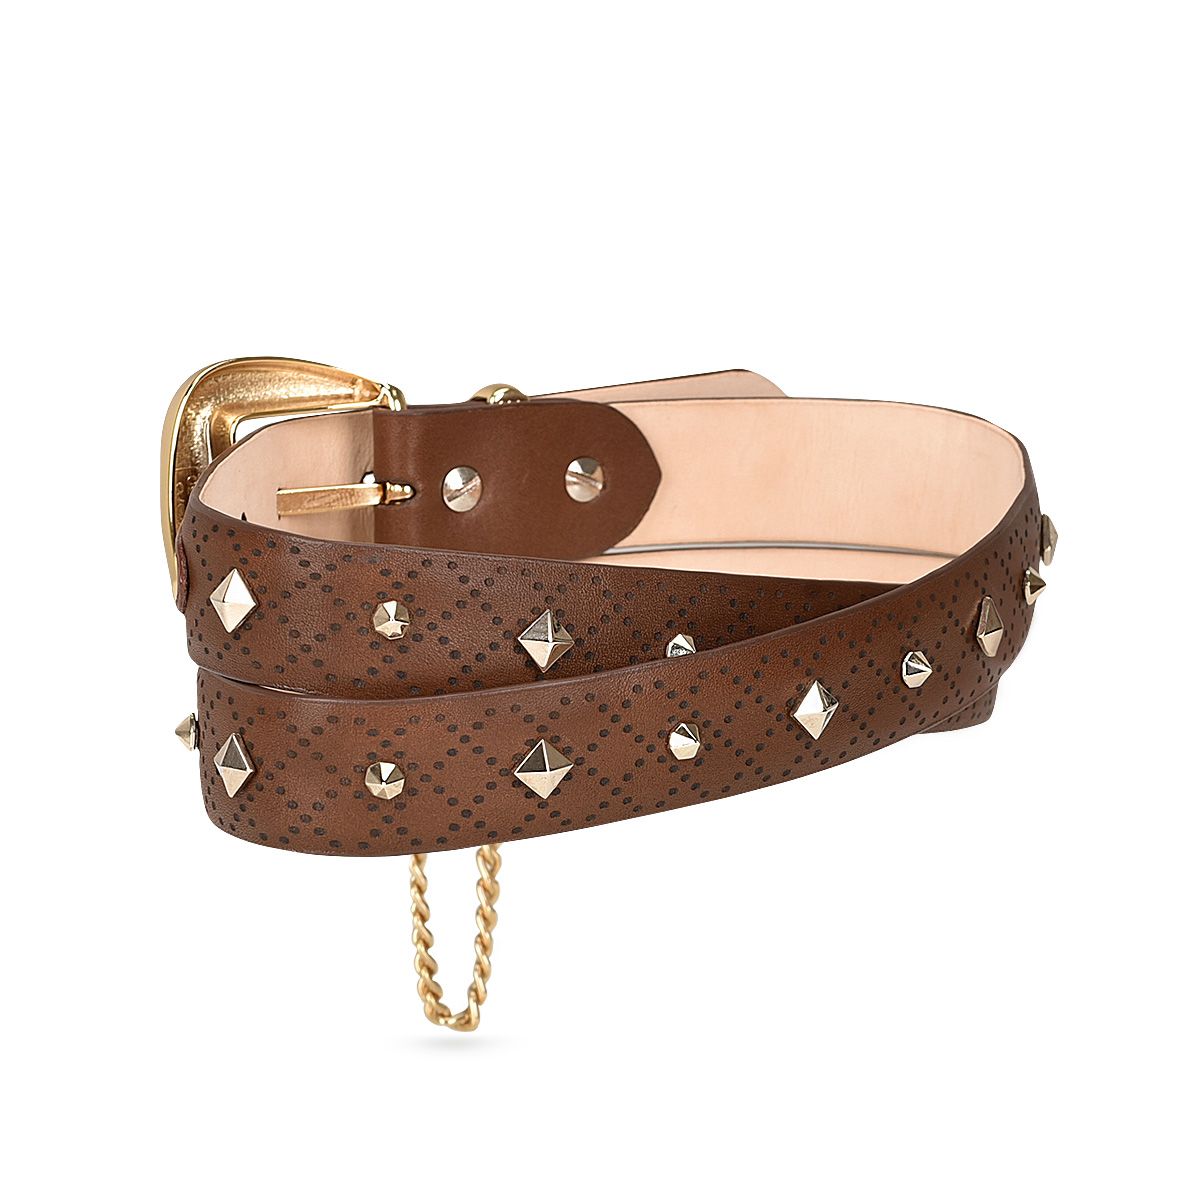 CDA11RS - Cuadra honey casual fashion cowhide belt for woman-Kuet.us